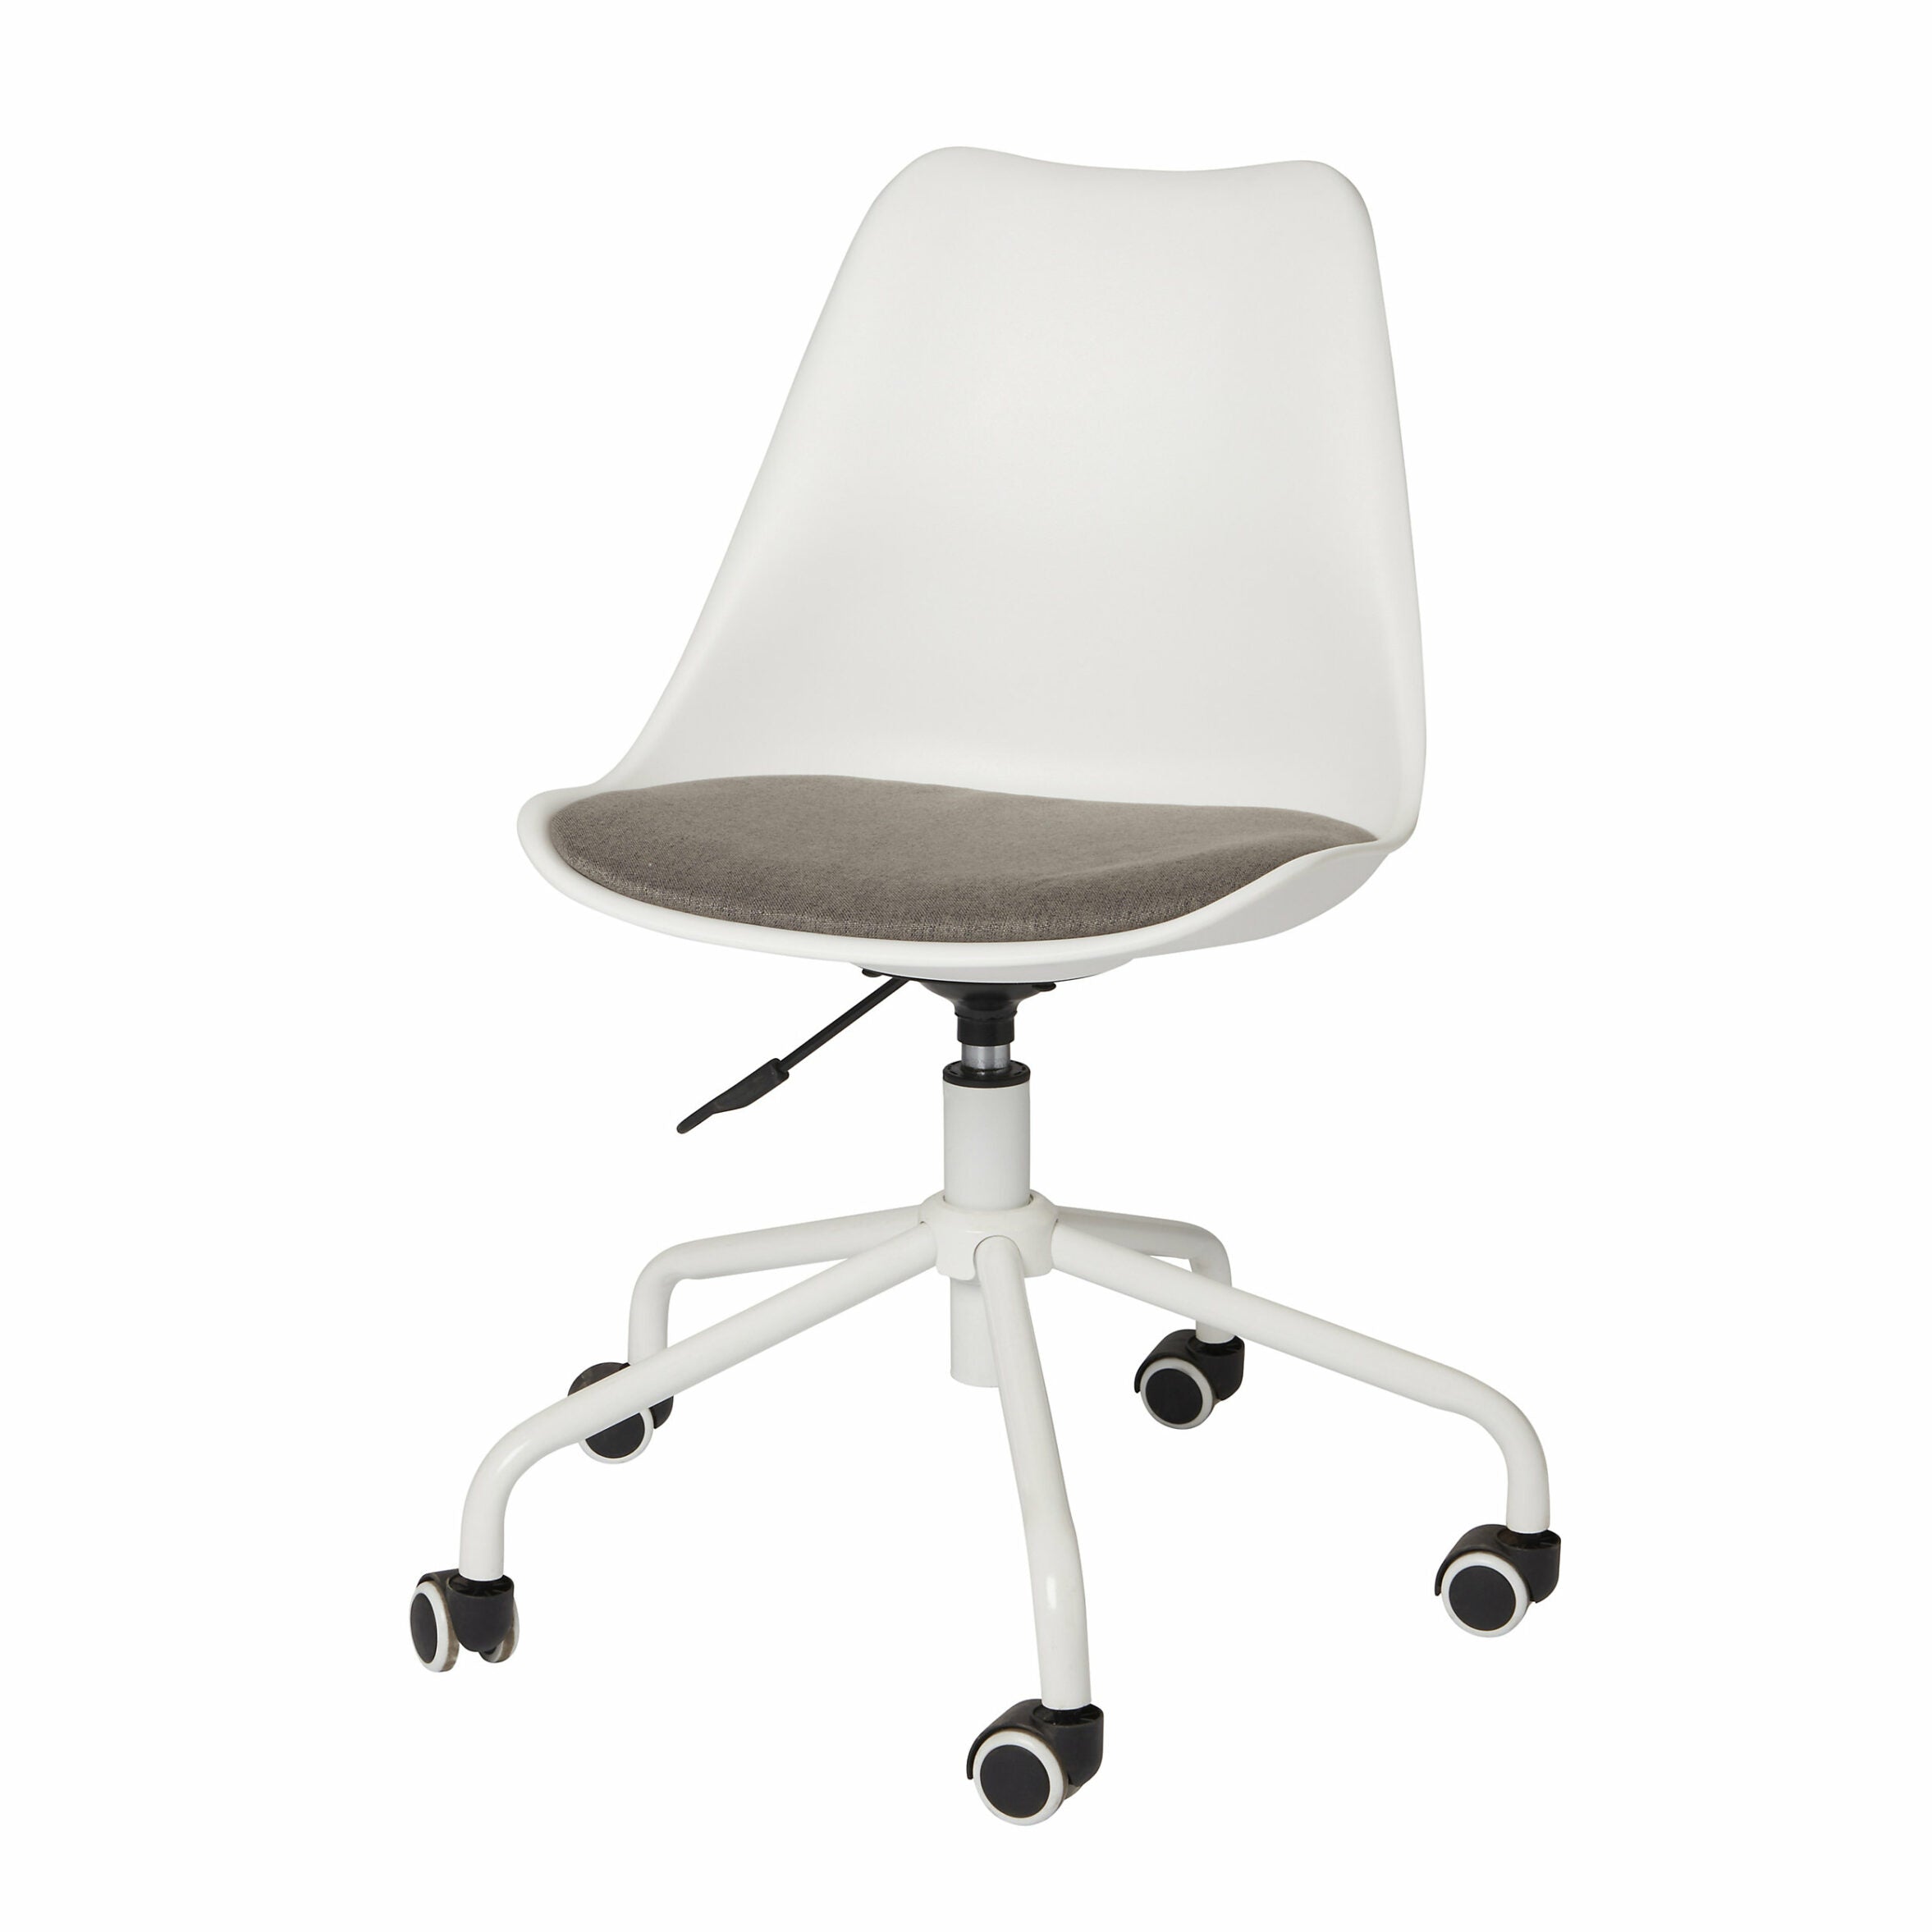 Tivissa White Office chair (H)820mm (W)480mm (D)560mm 0627 (Copy)